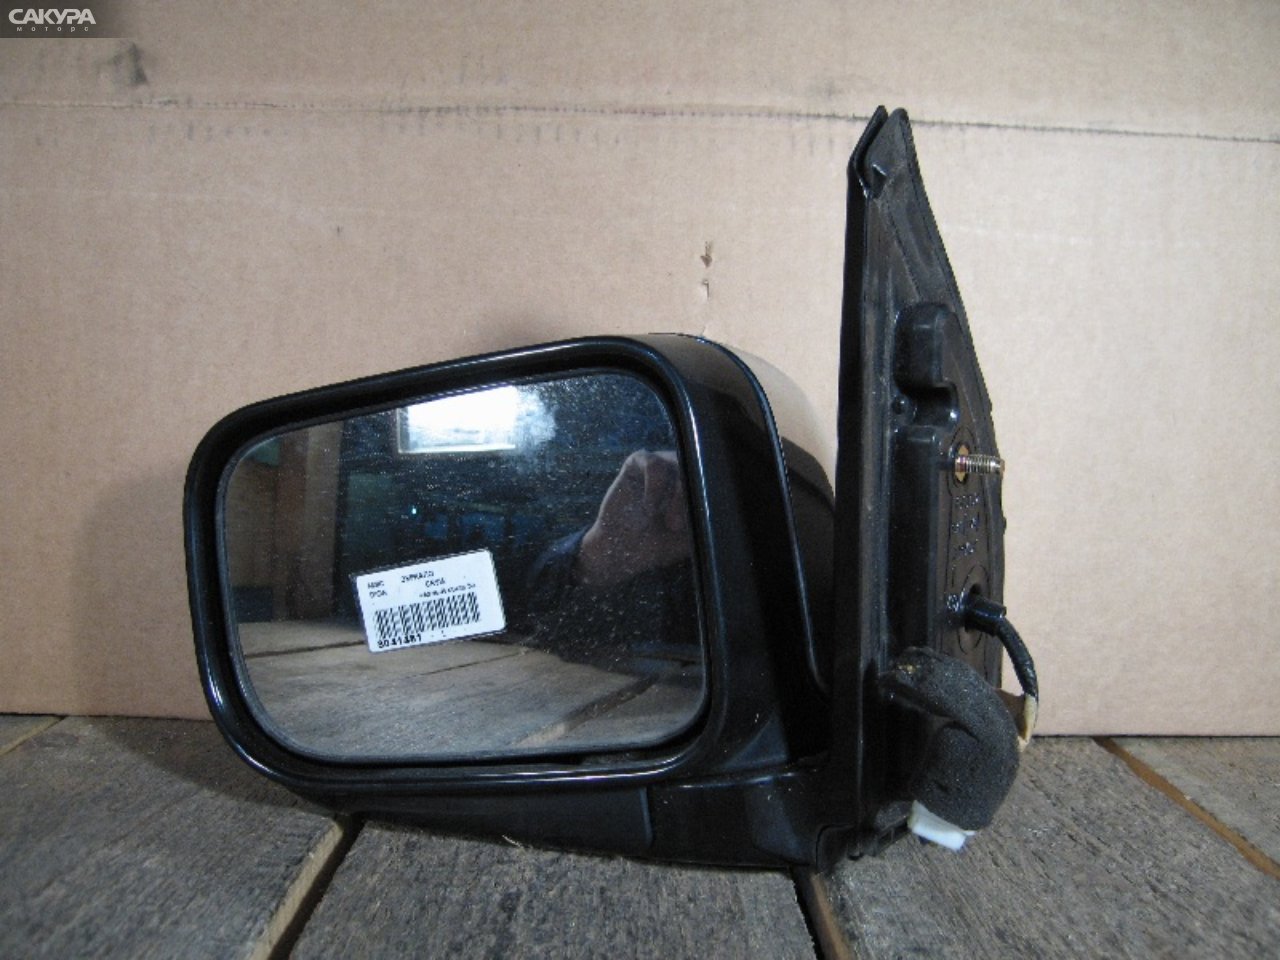 Зеркало боковое левое Mitsubishi Dion CR9W: купить в Сакура Абакан.